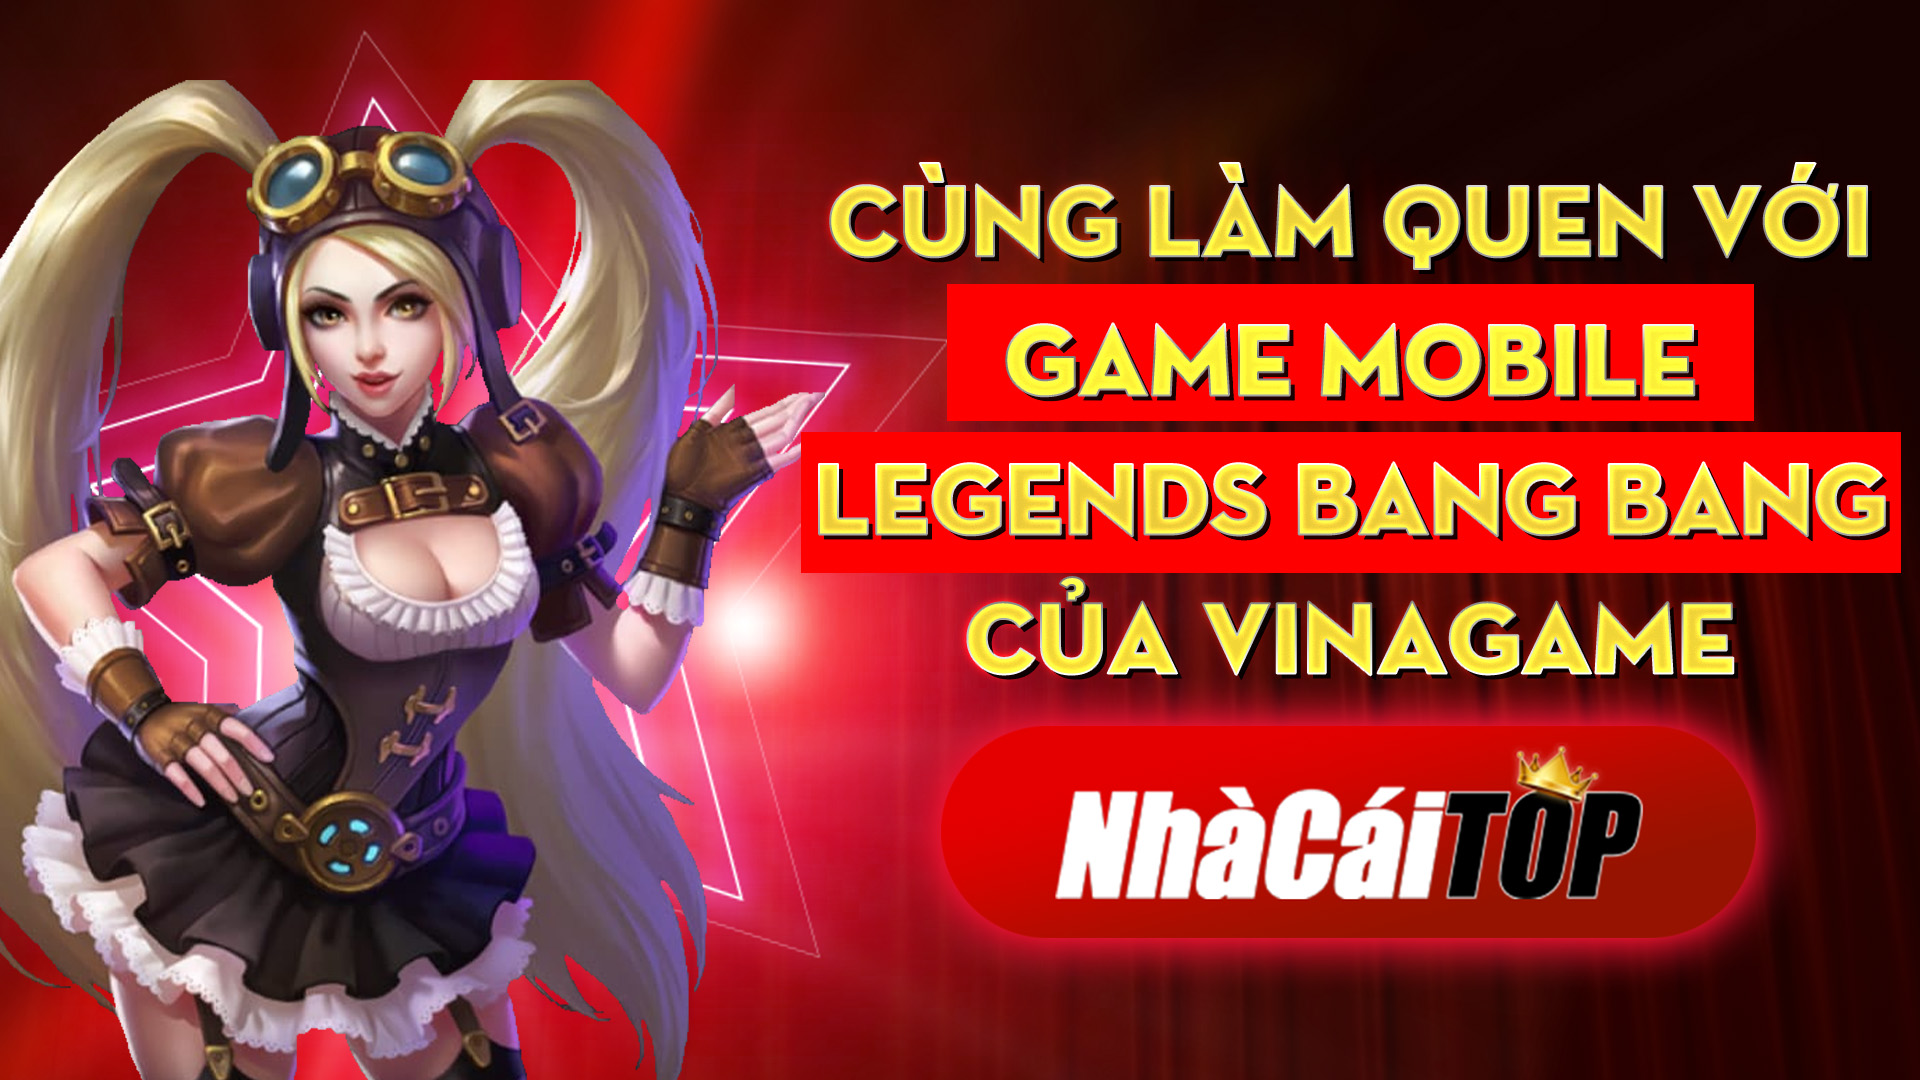 352 Cung Lam Quen Voi Game Mobile Legends Bang Bang Cua Vinagame